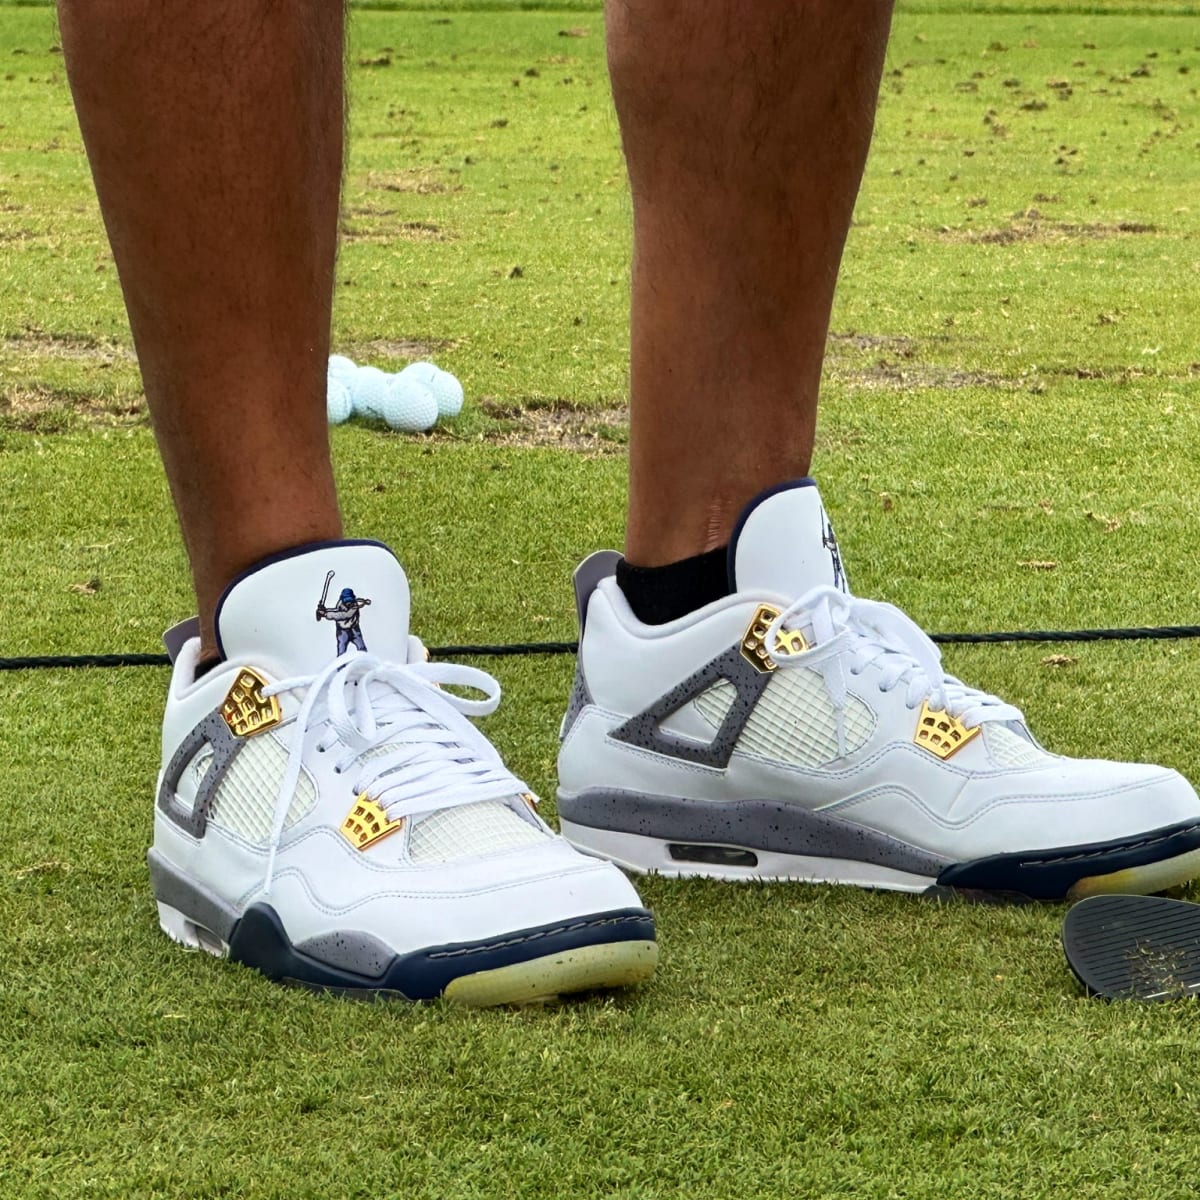 Derek Jeter & Michael Phelps Wear Air Jordans on Golf Course